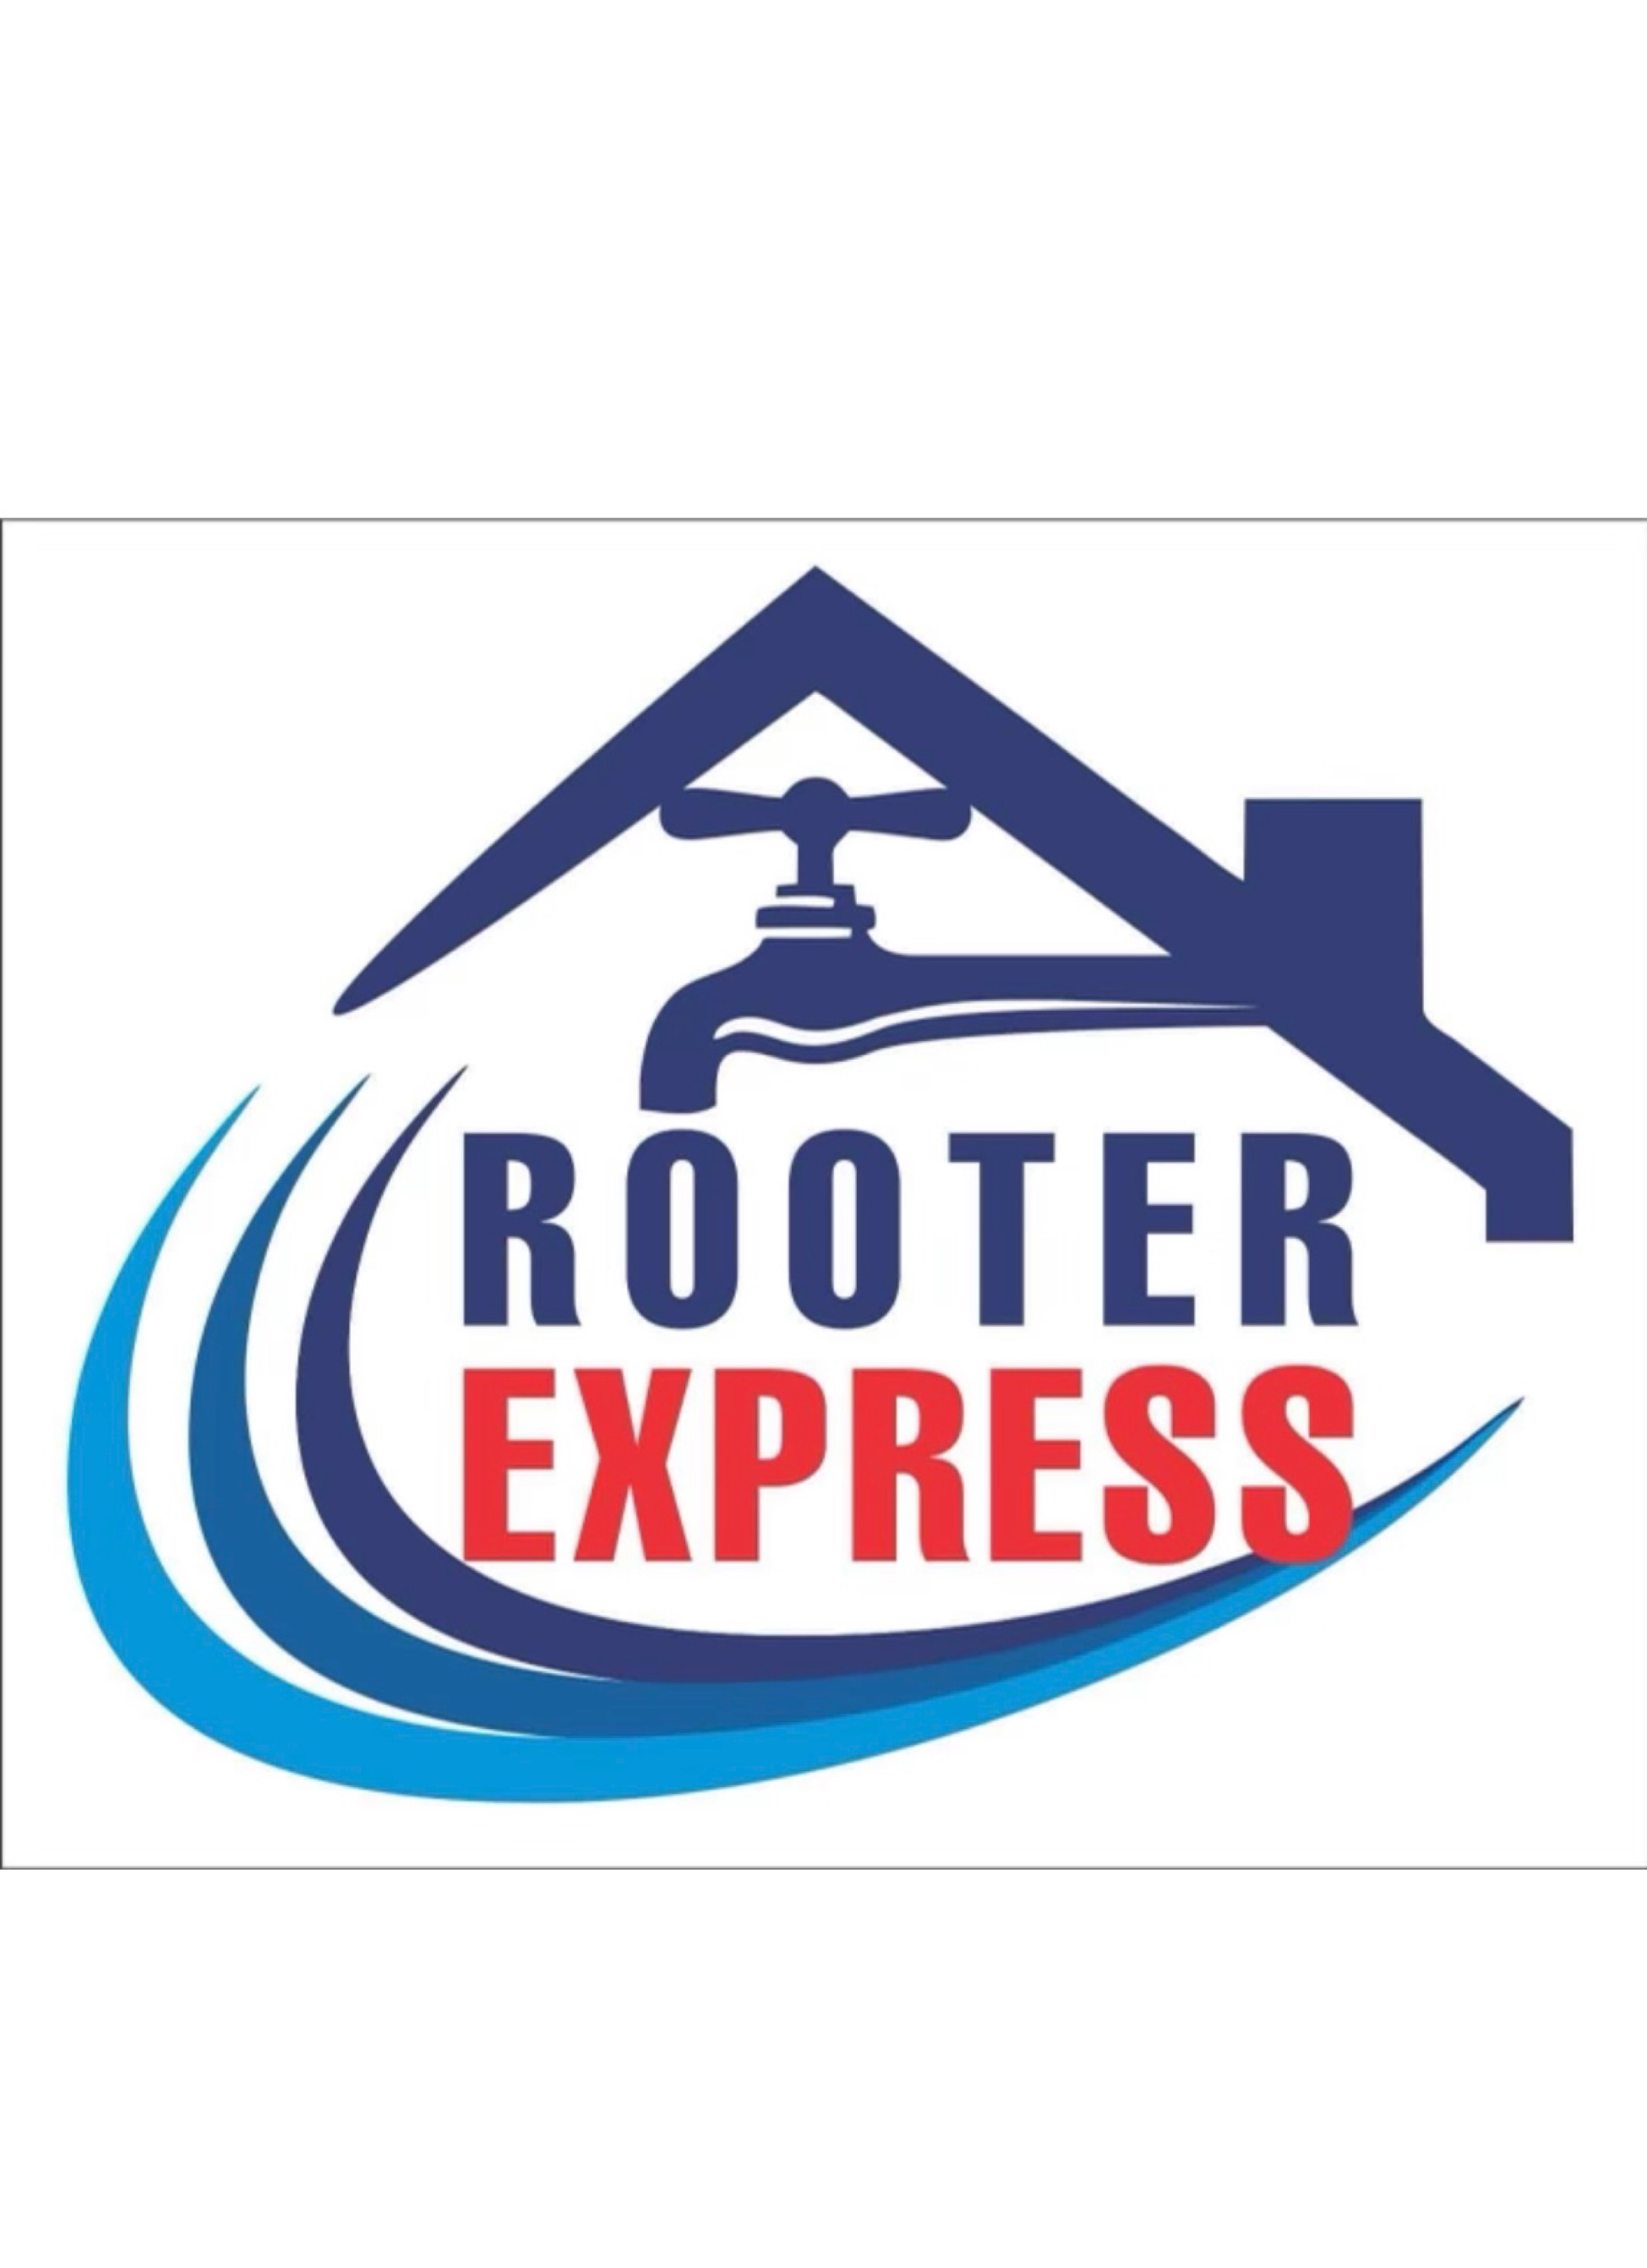 Rooter Express Logo